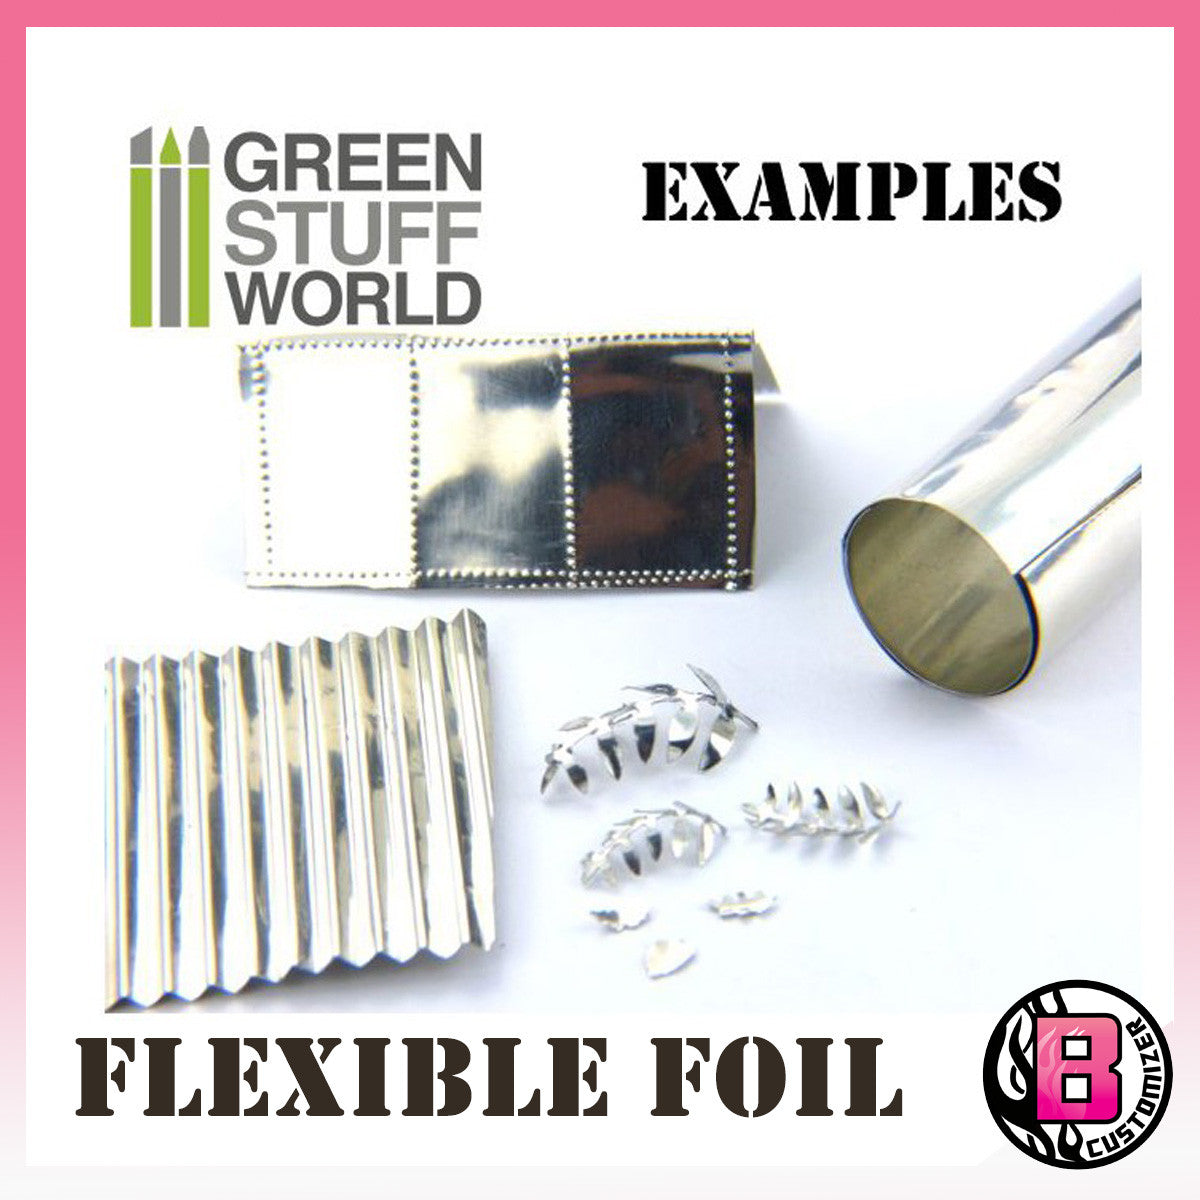 Green Stuff World Corrugater and Flexible tin foil